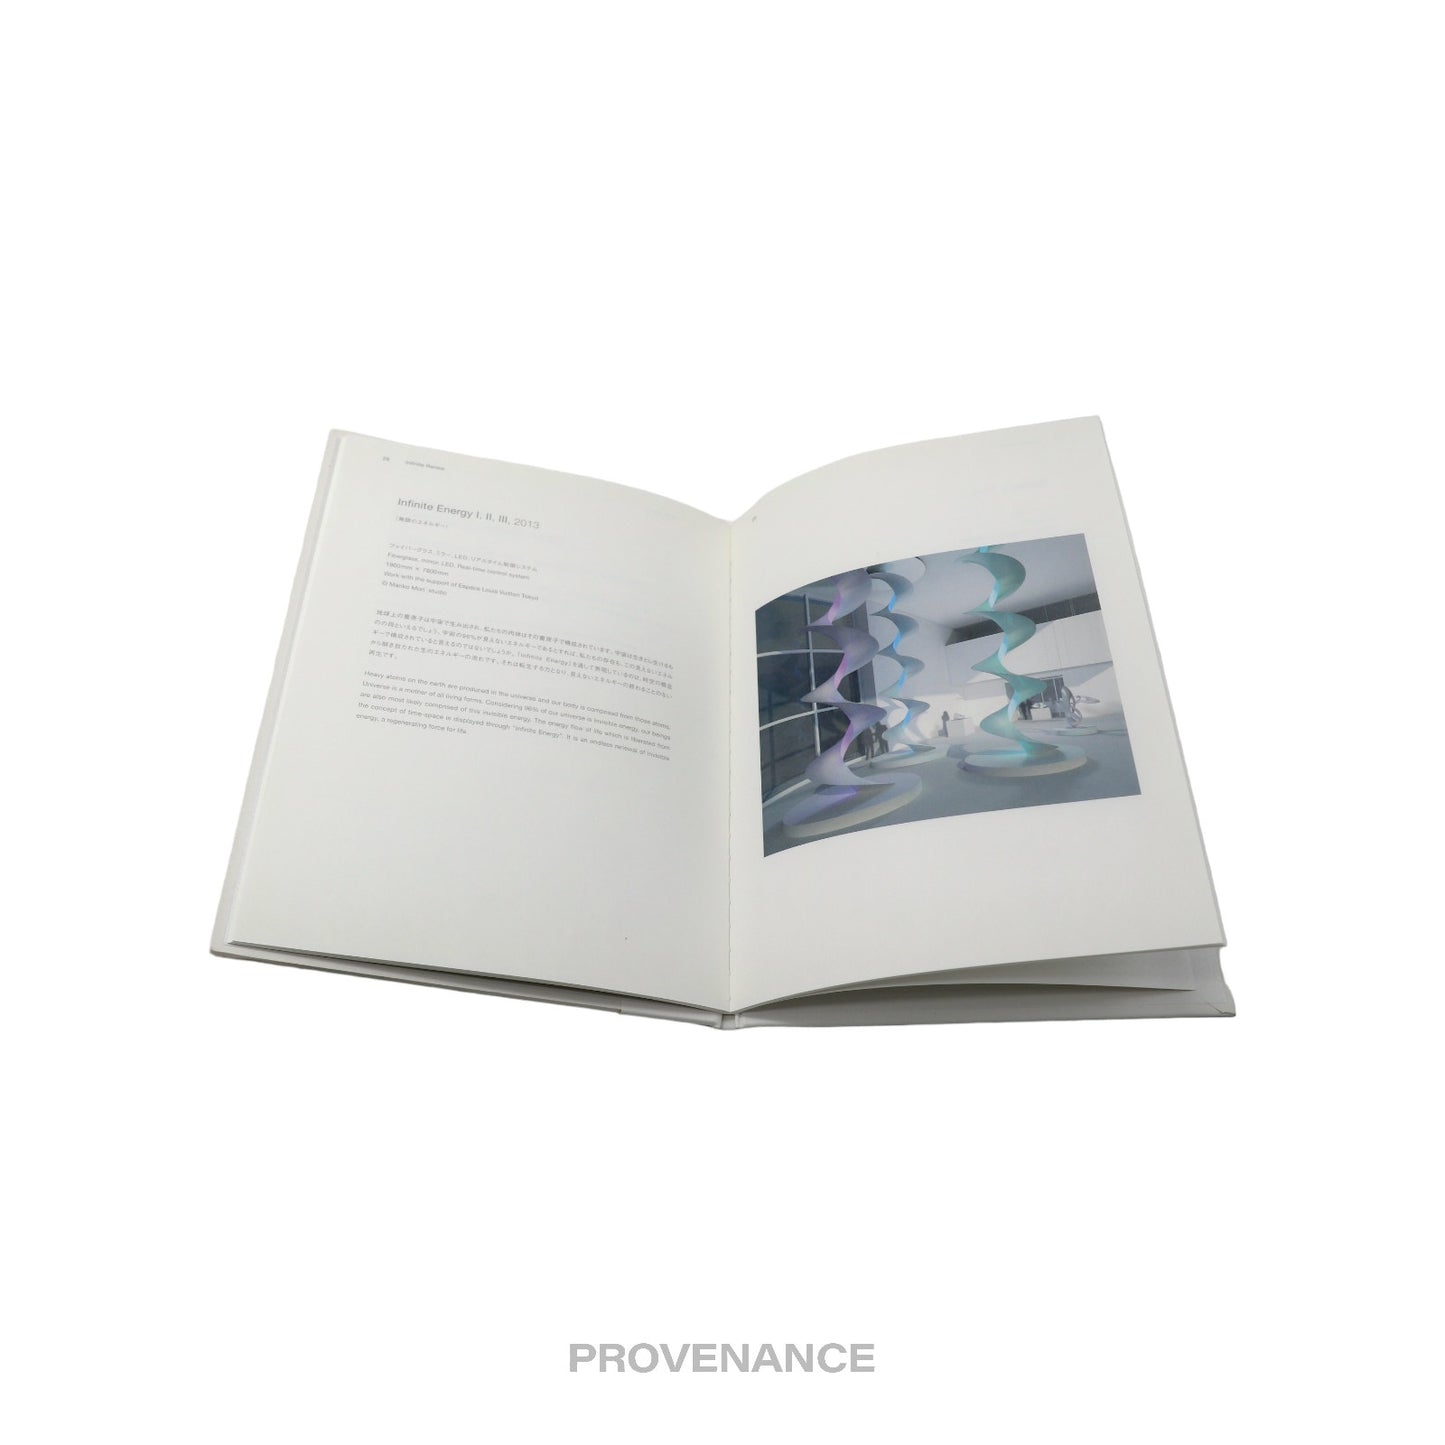 🔴 Louis Vuitton INFINITE RENEW Espace Art Book